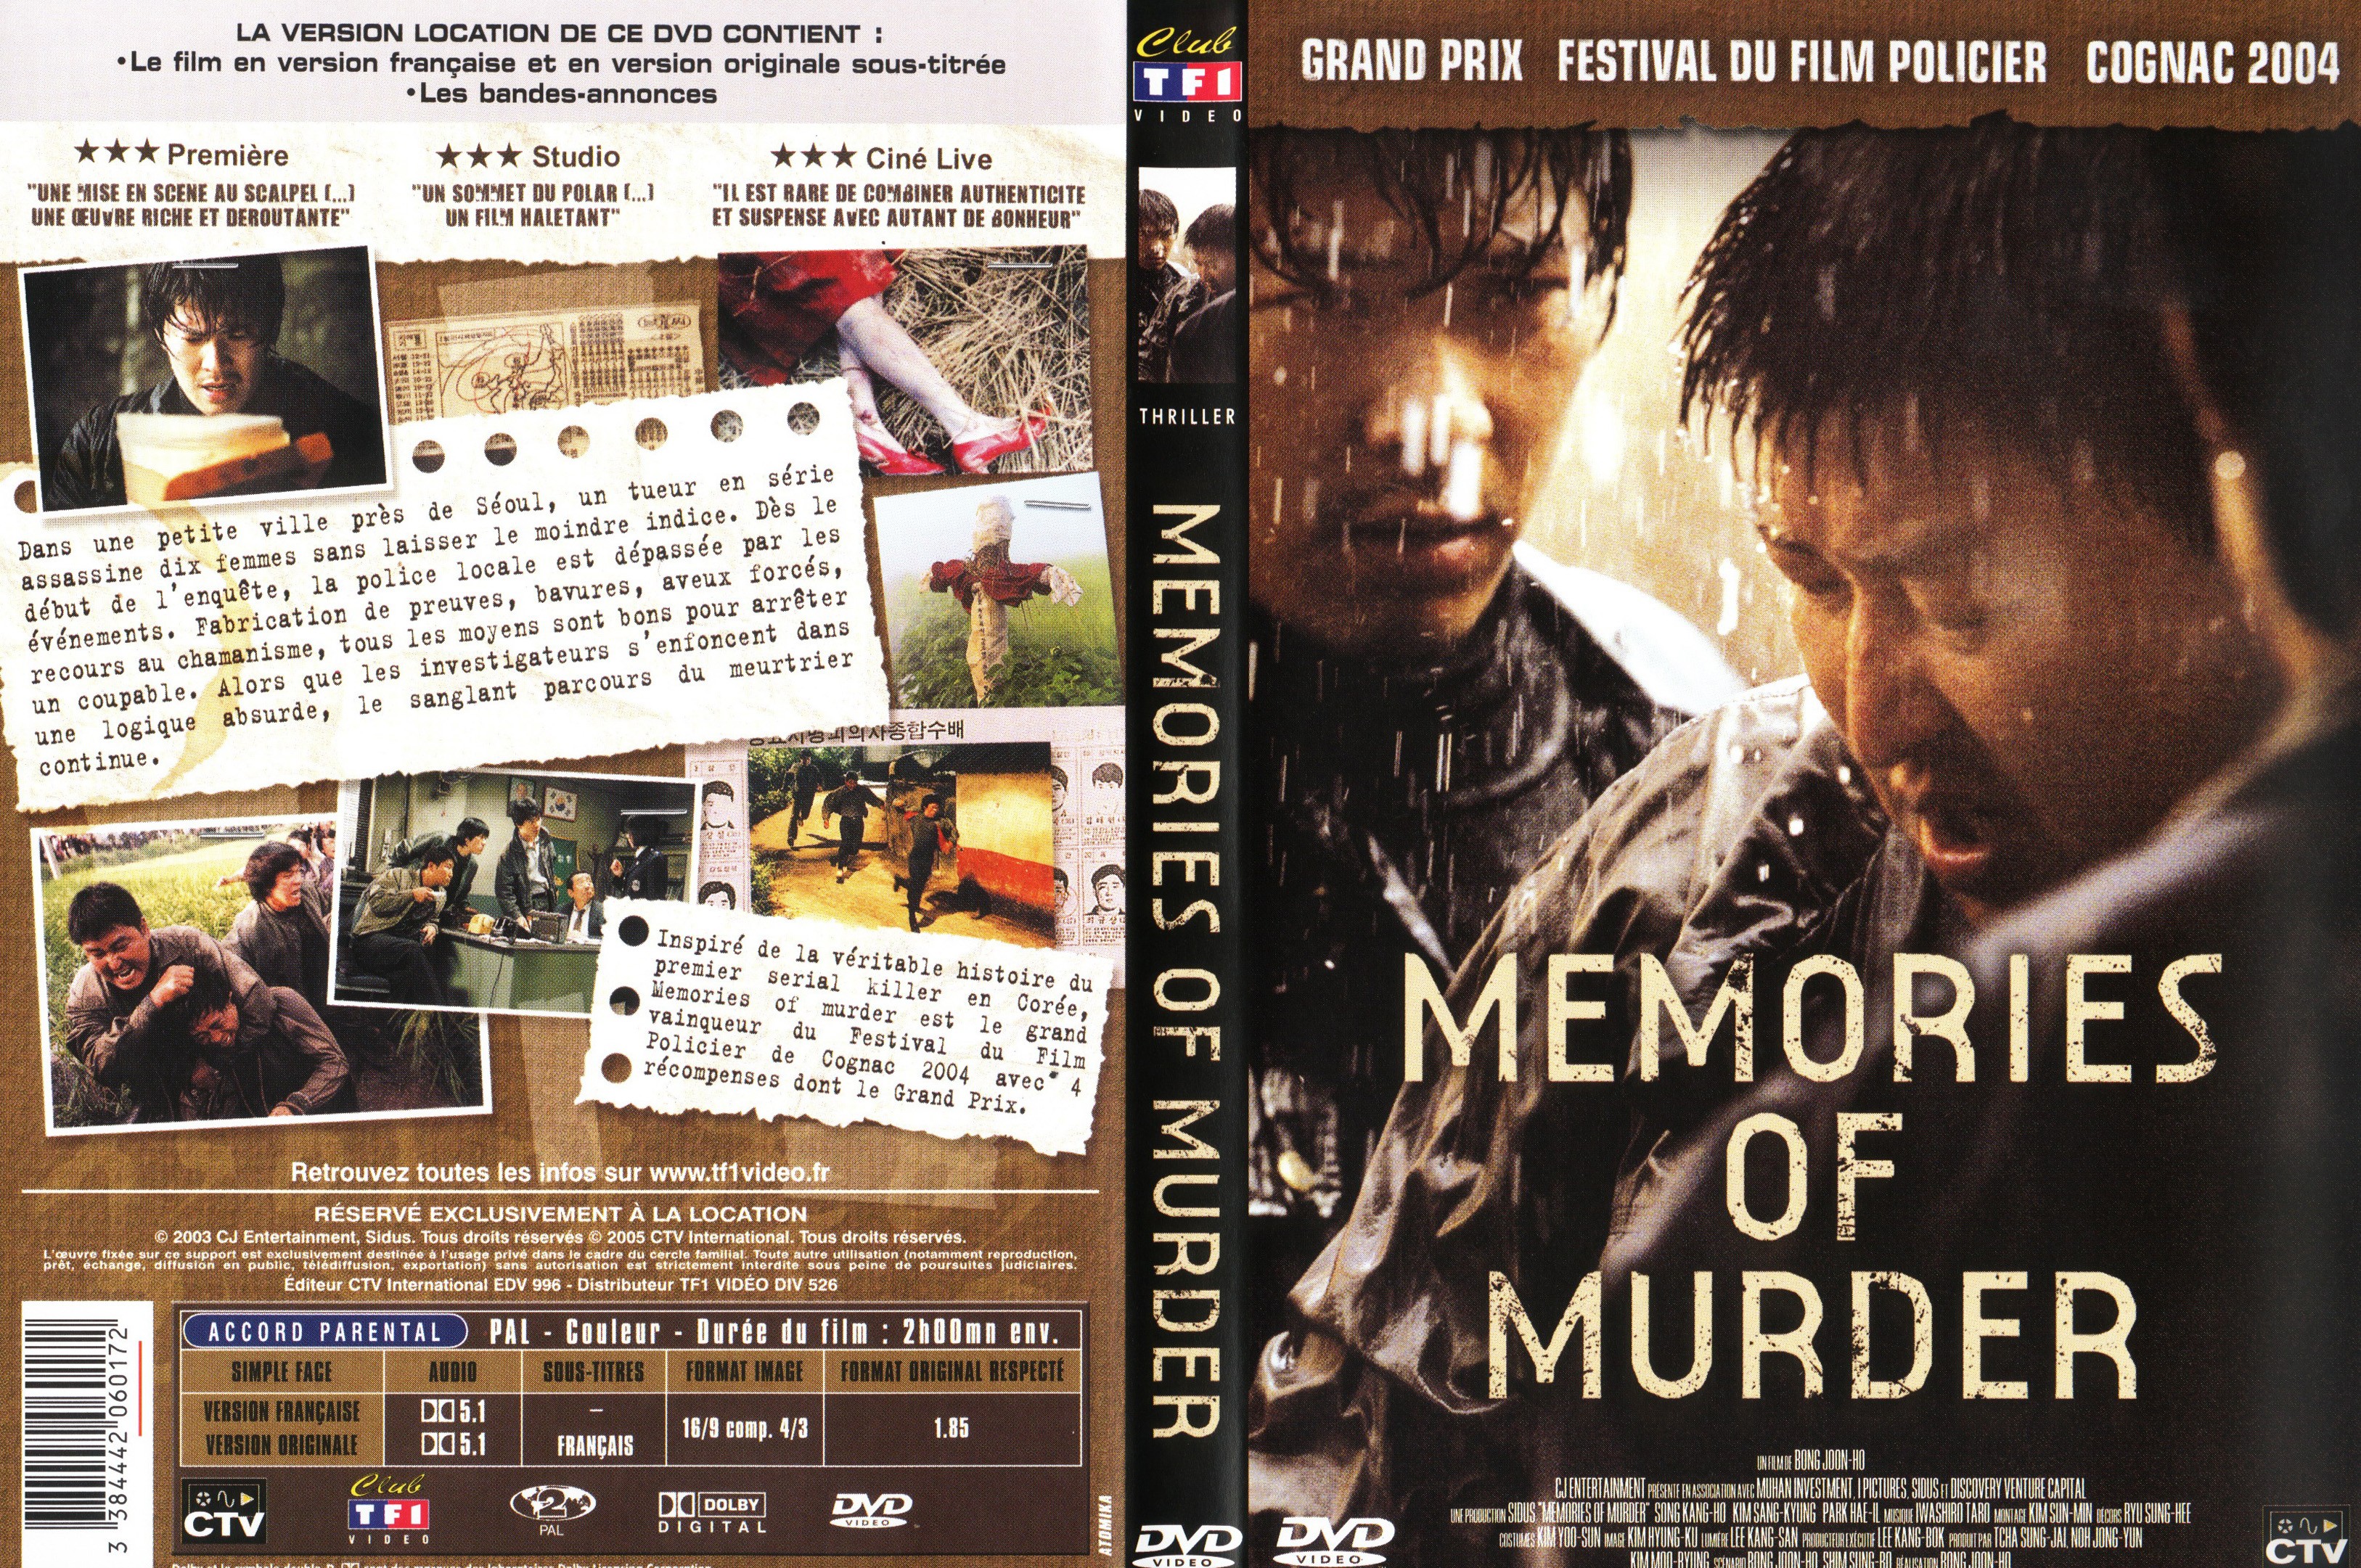 Jaquette DVD Memories of murder v2